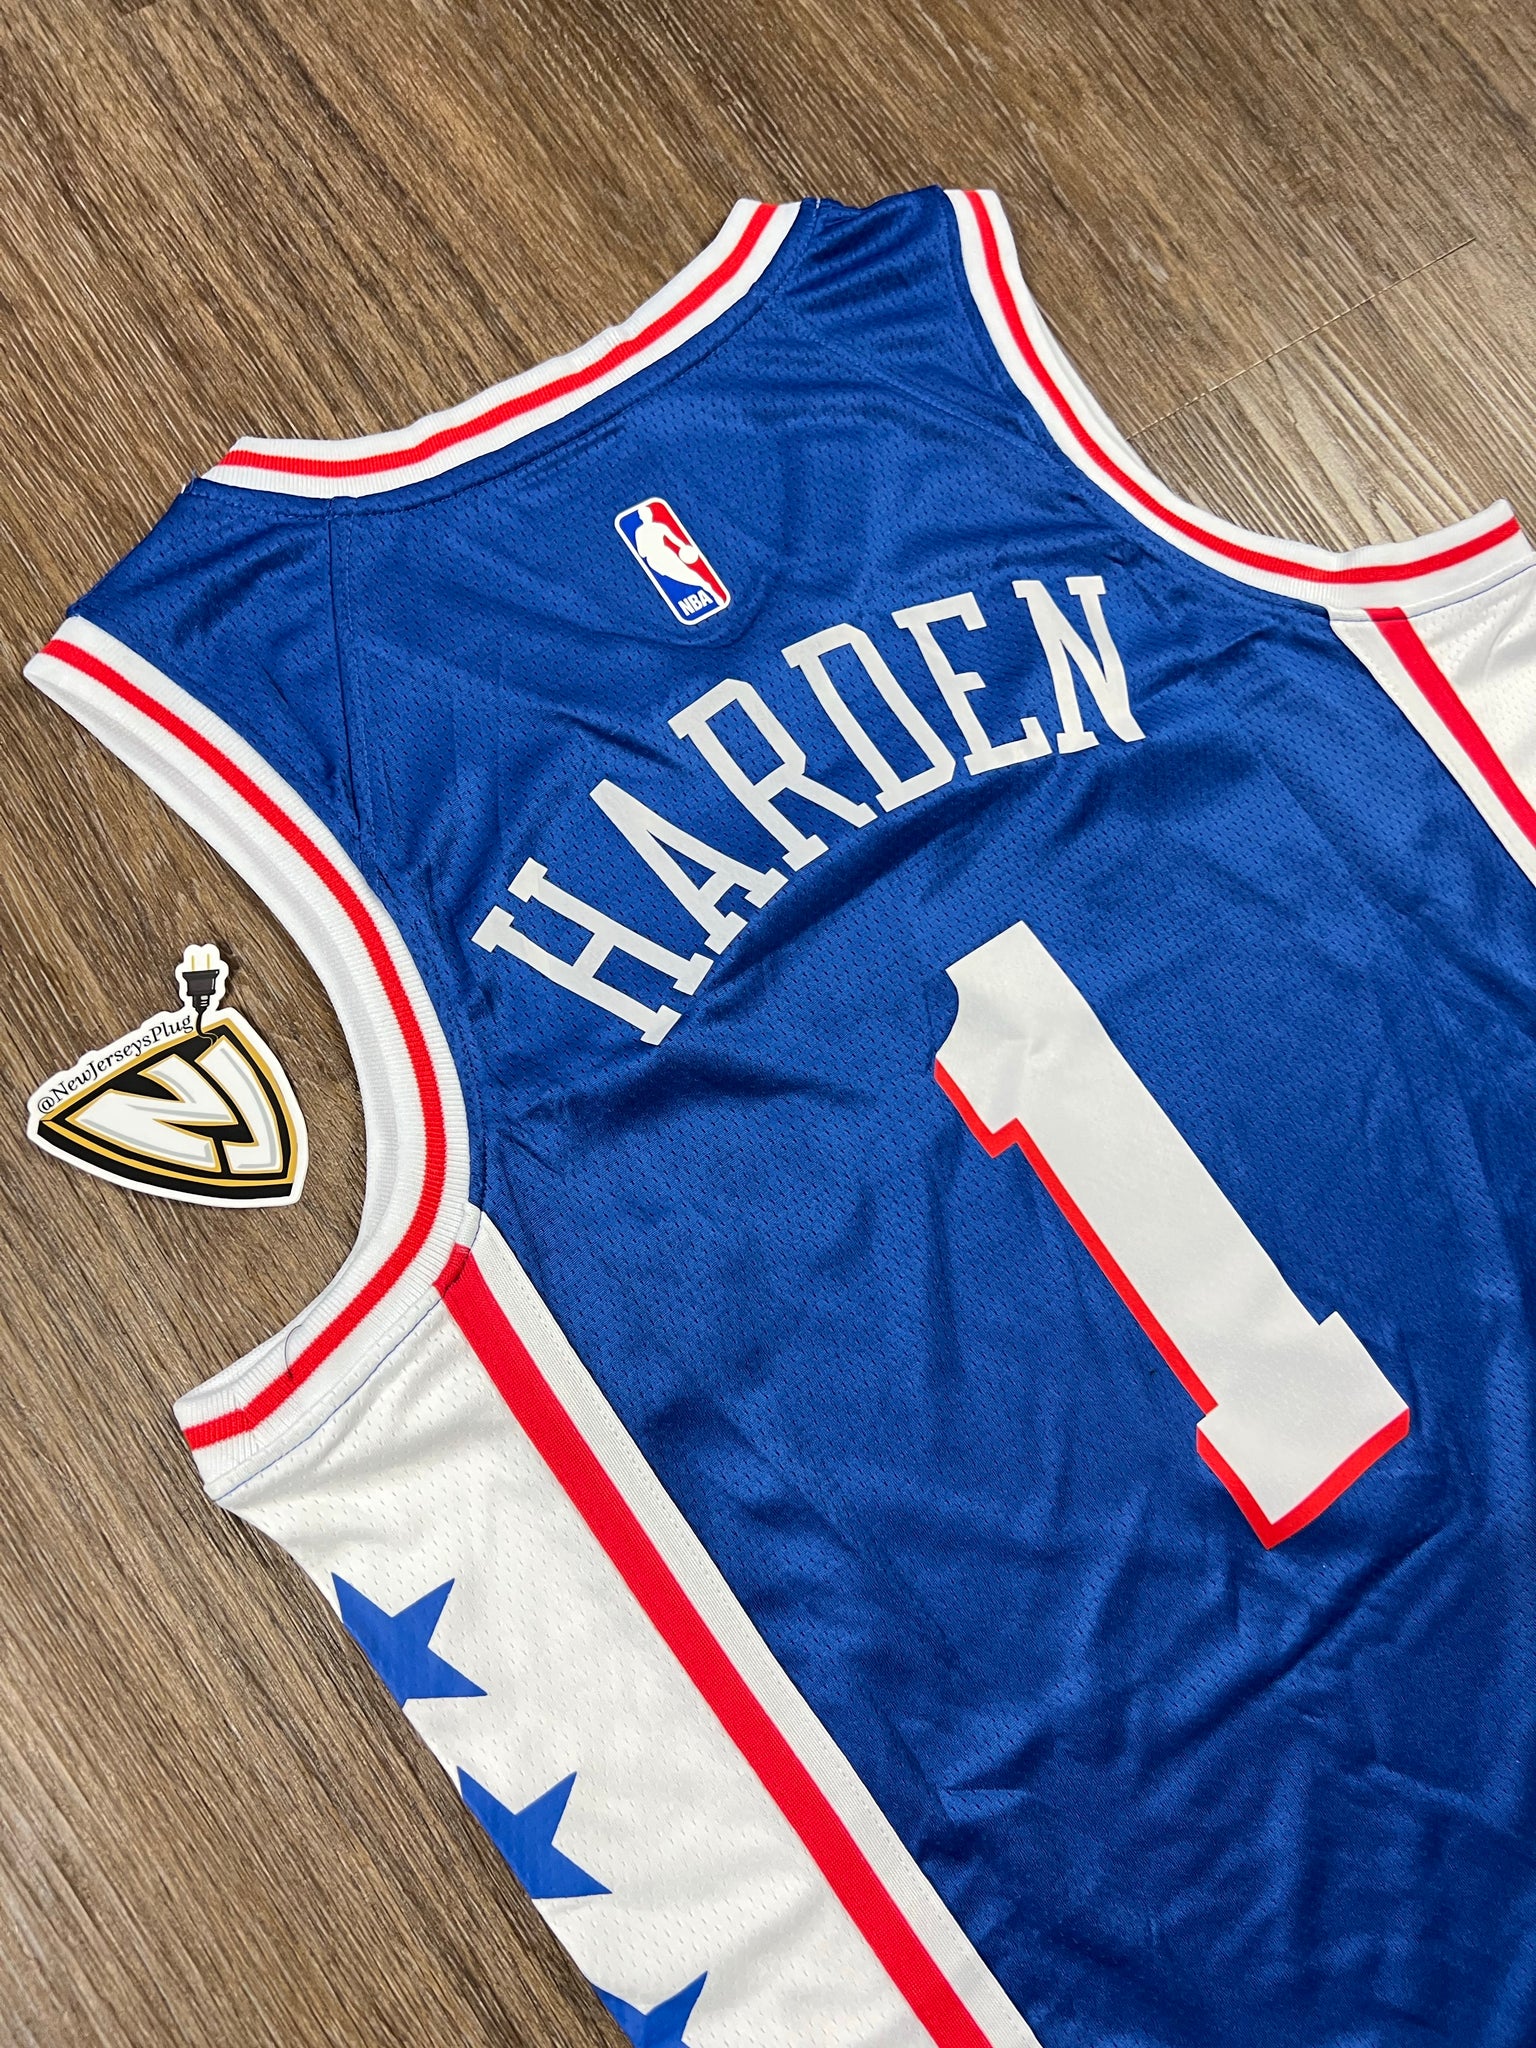 Philadelphia 76ers James Harden Jersey – NewJerseysPlug